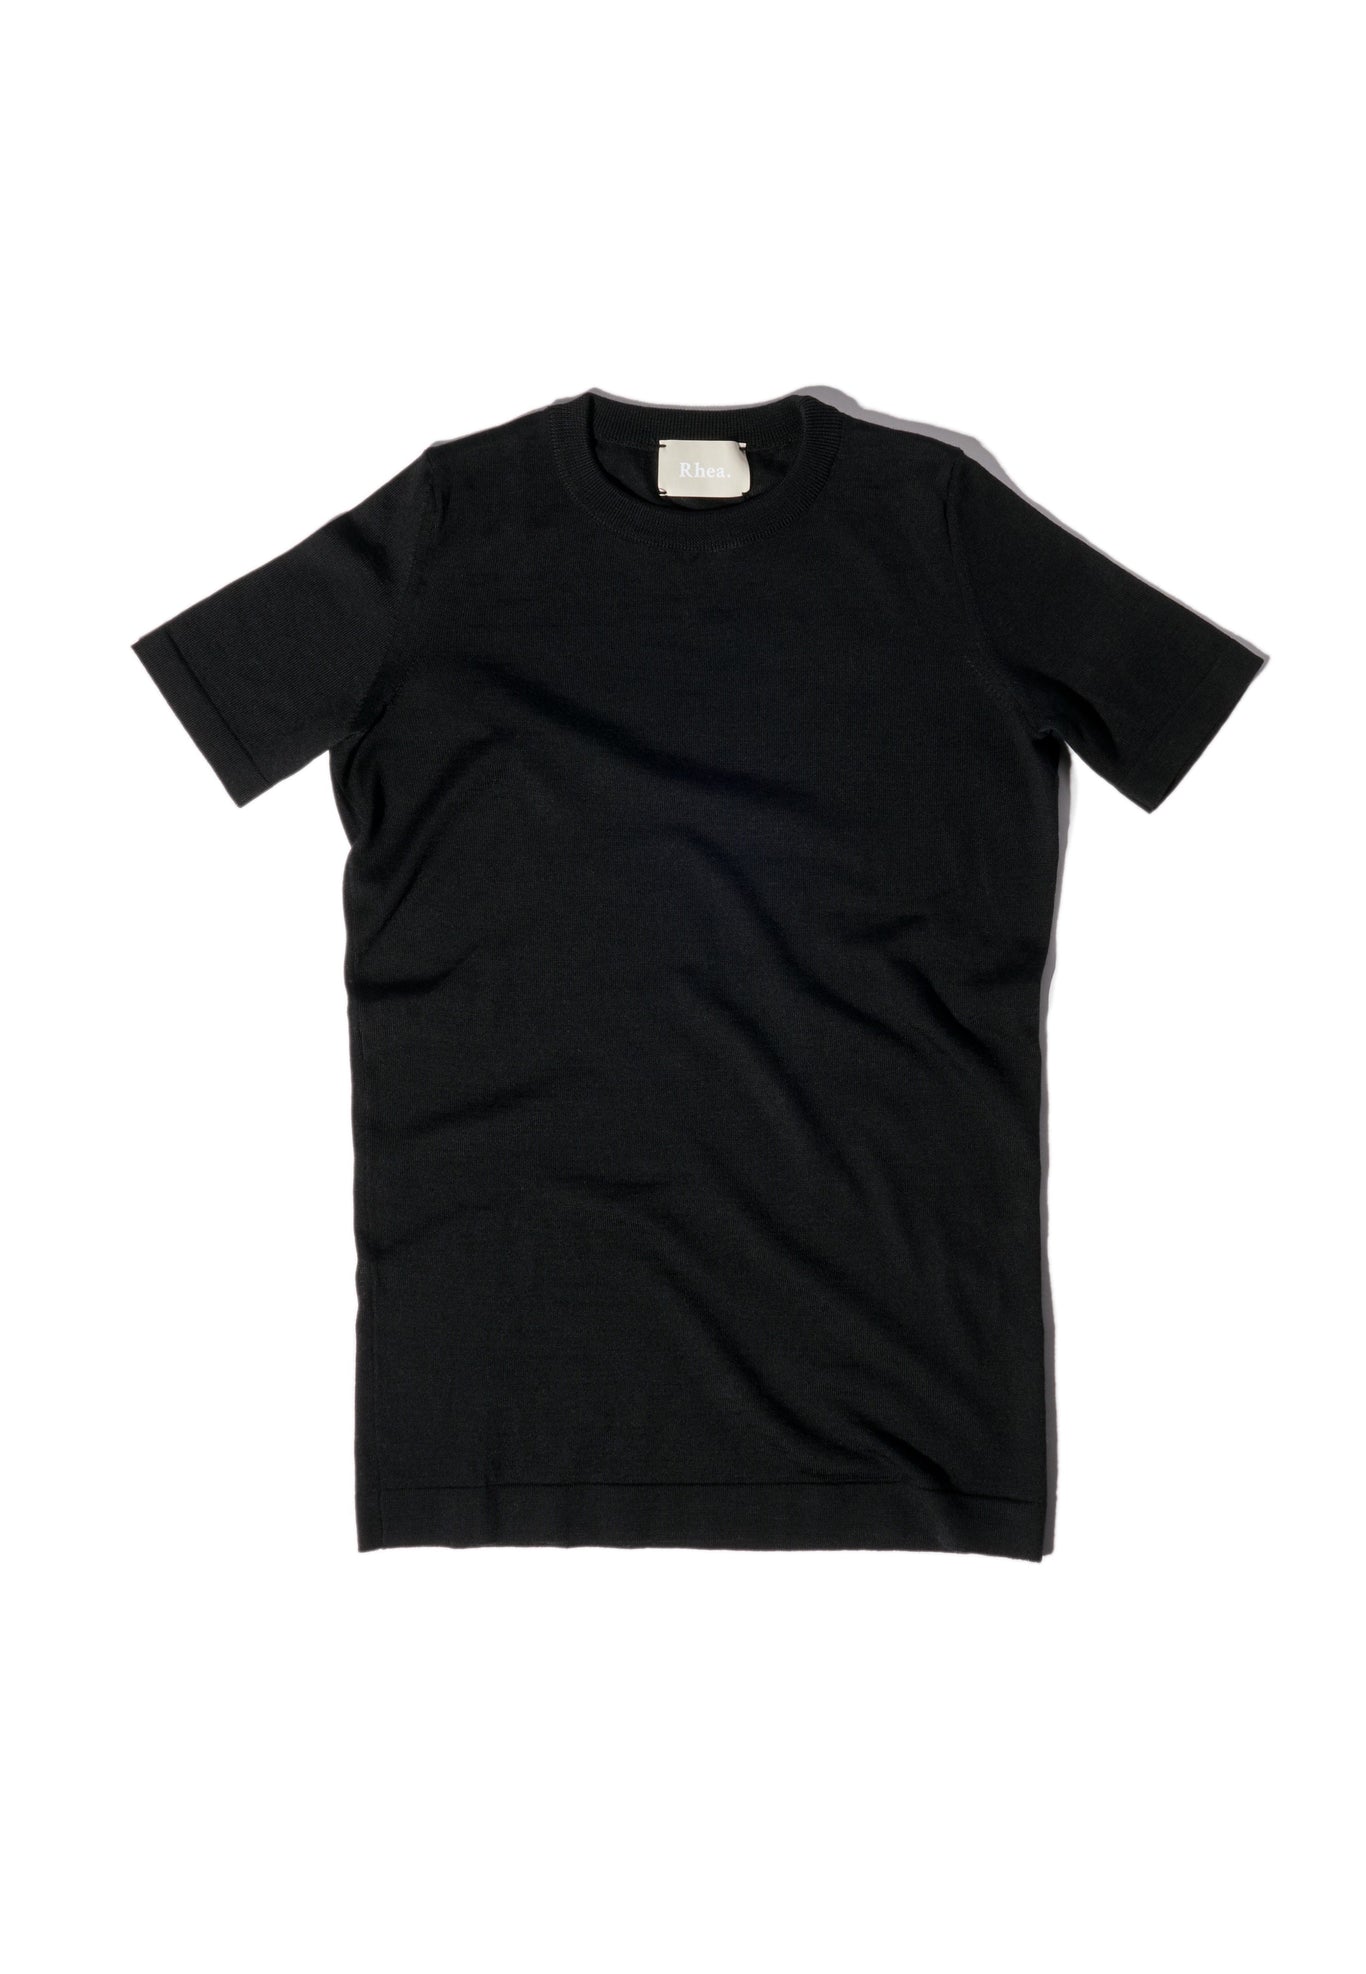 Rhea Black T-Shirt